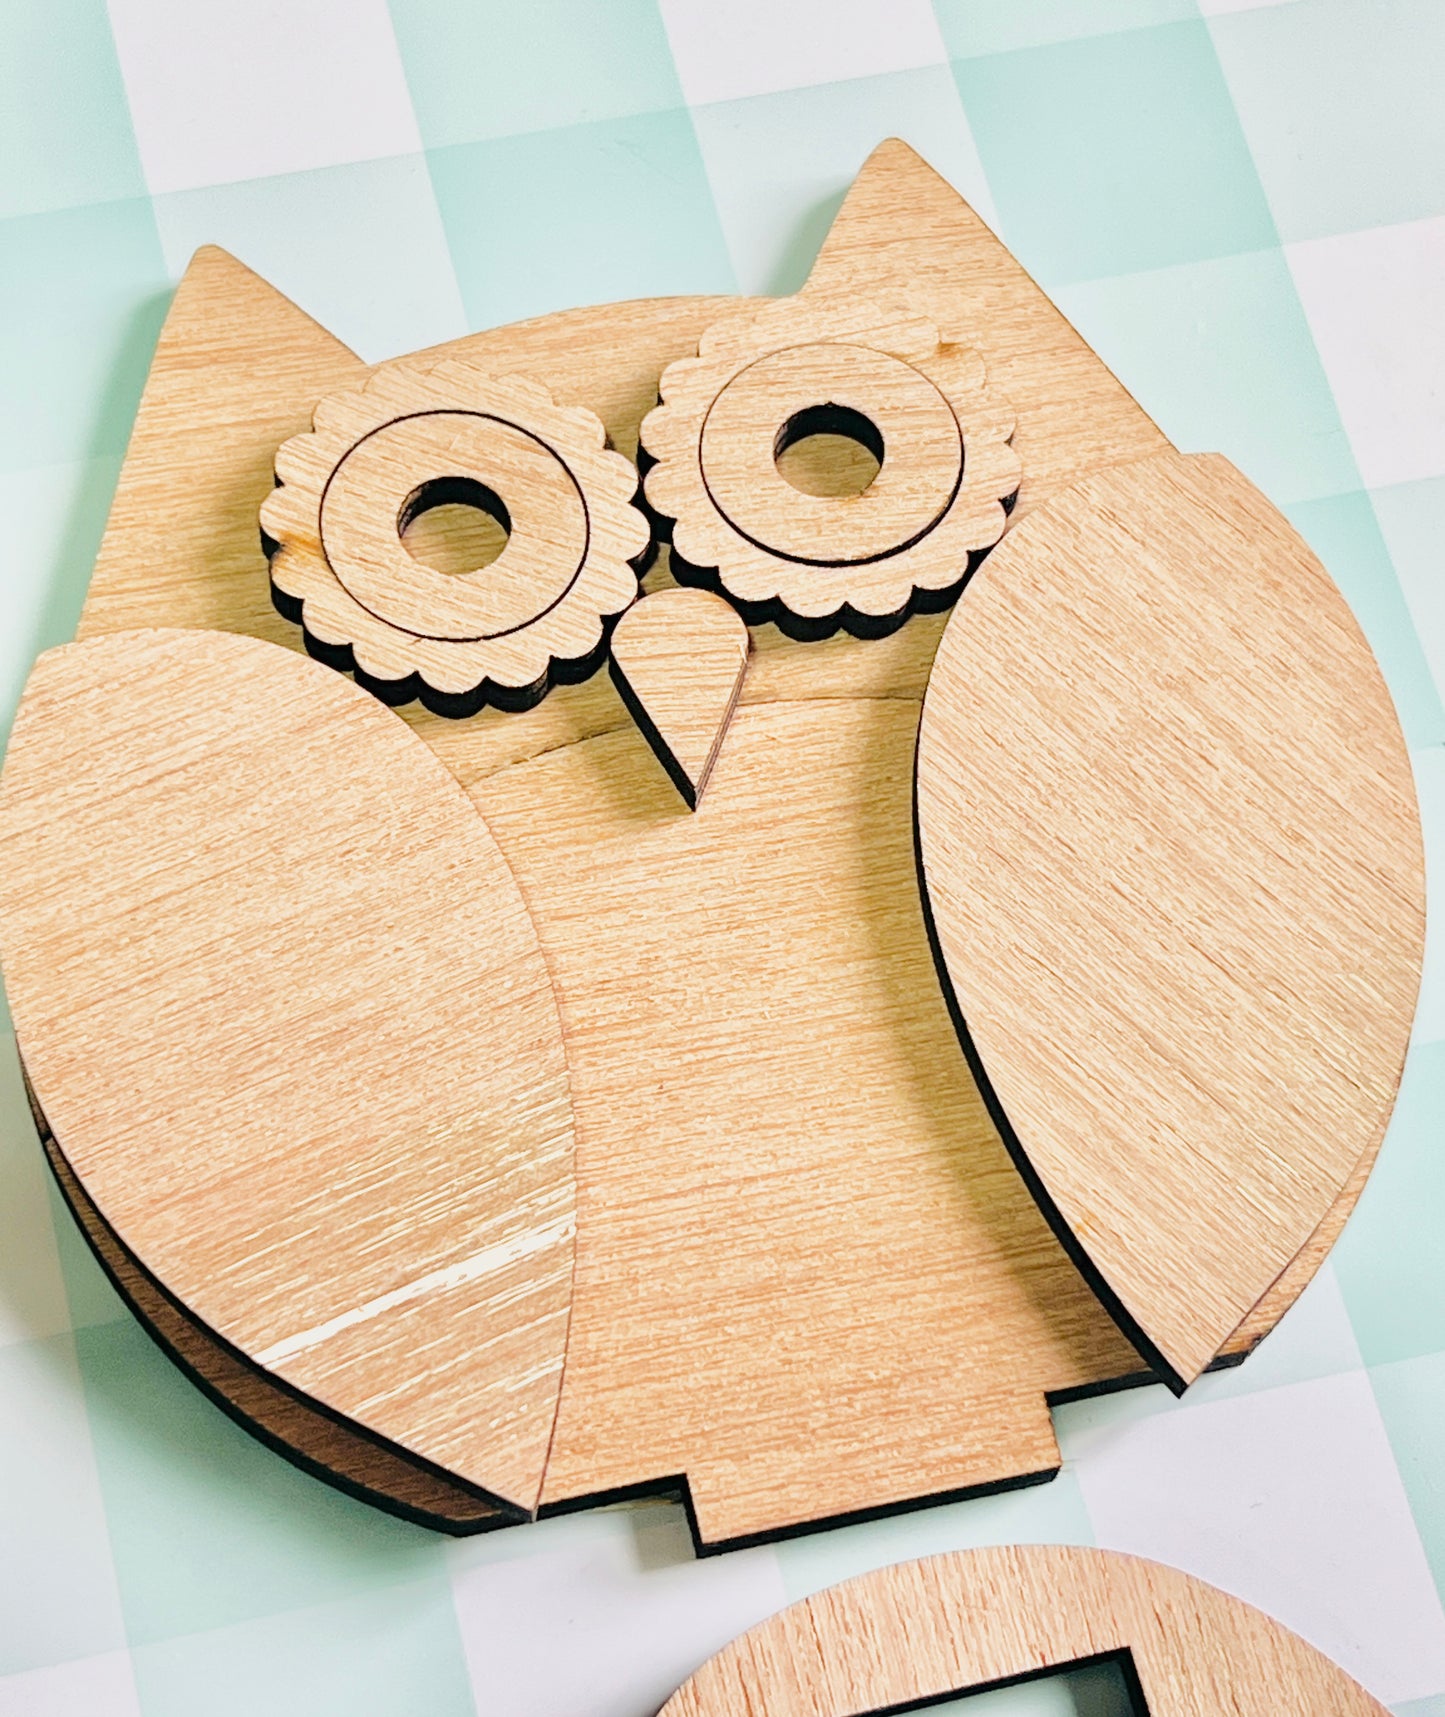 Whimsical Owl Cuties